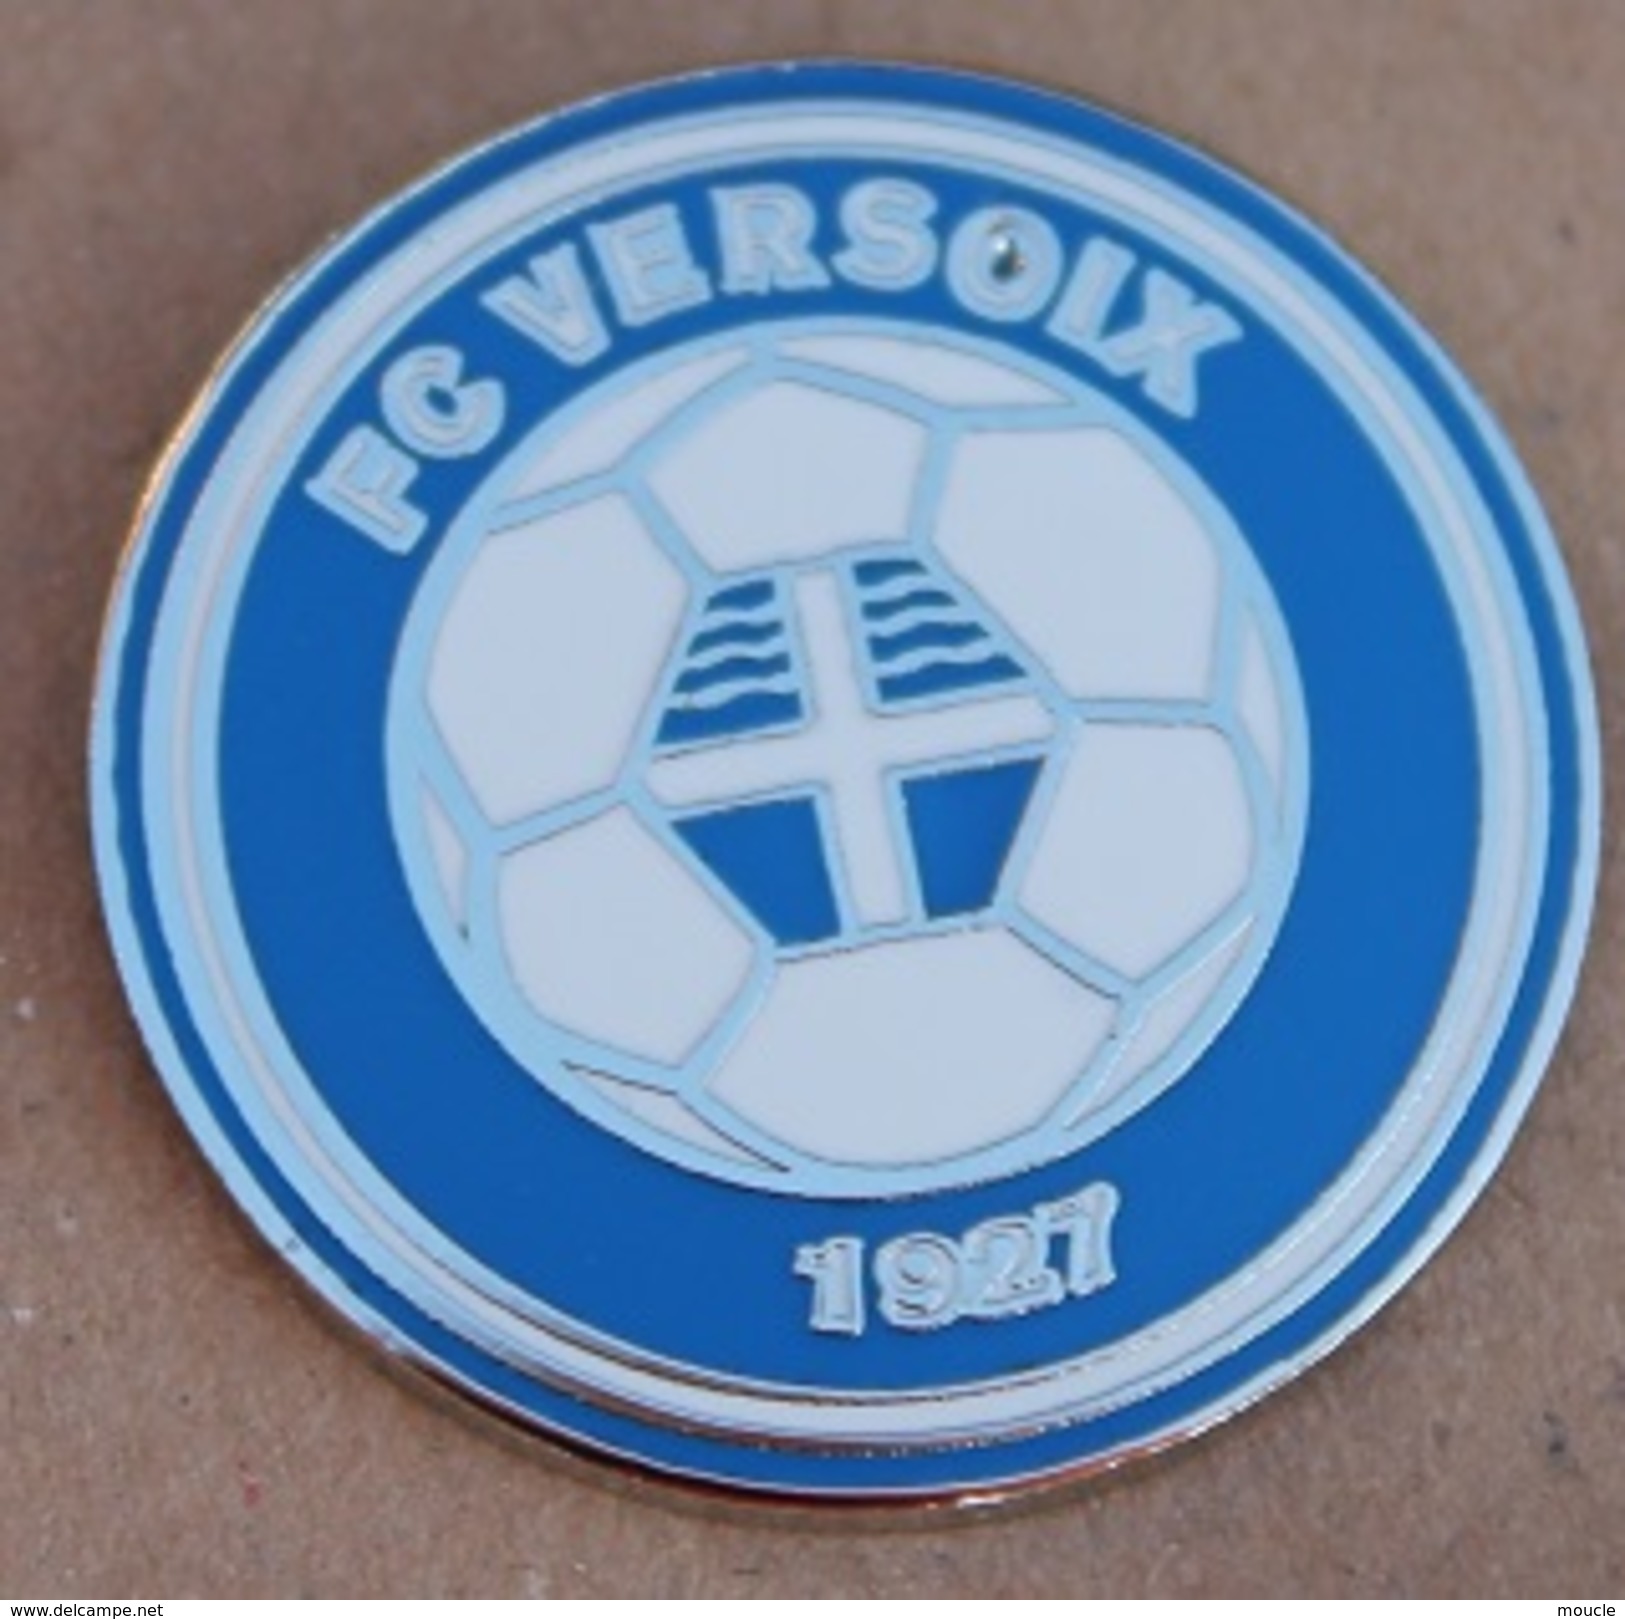 FC VERSOIX 1927  - FOOTBALL CLUB VERSOIX - GENEVE-  SUISSE - BALLON -     (16) - Football